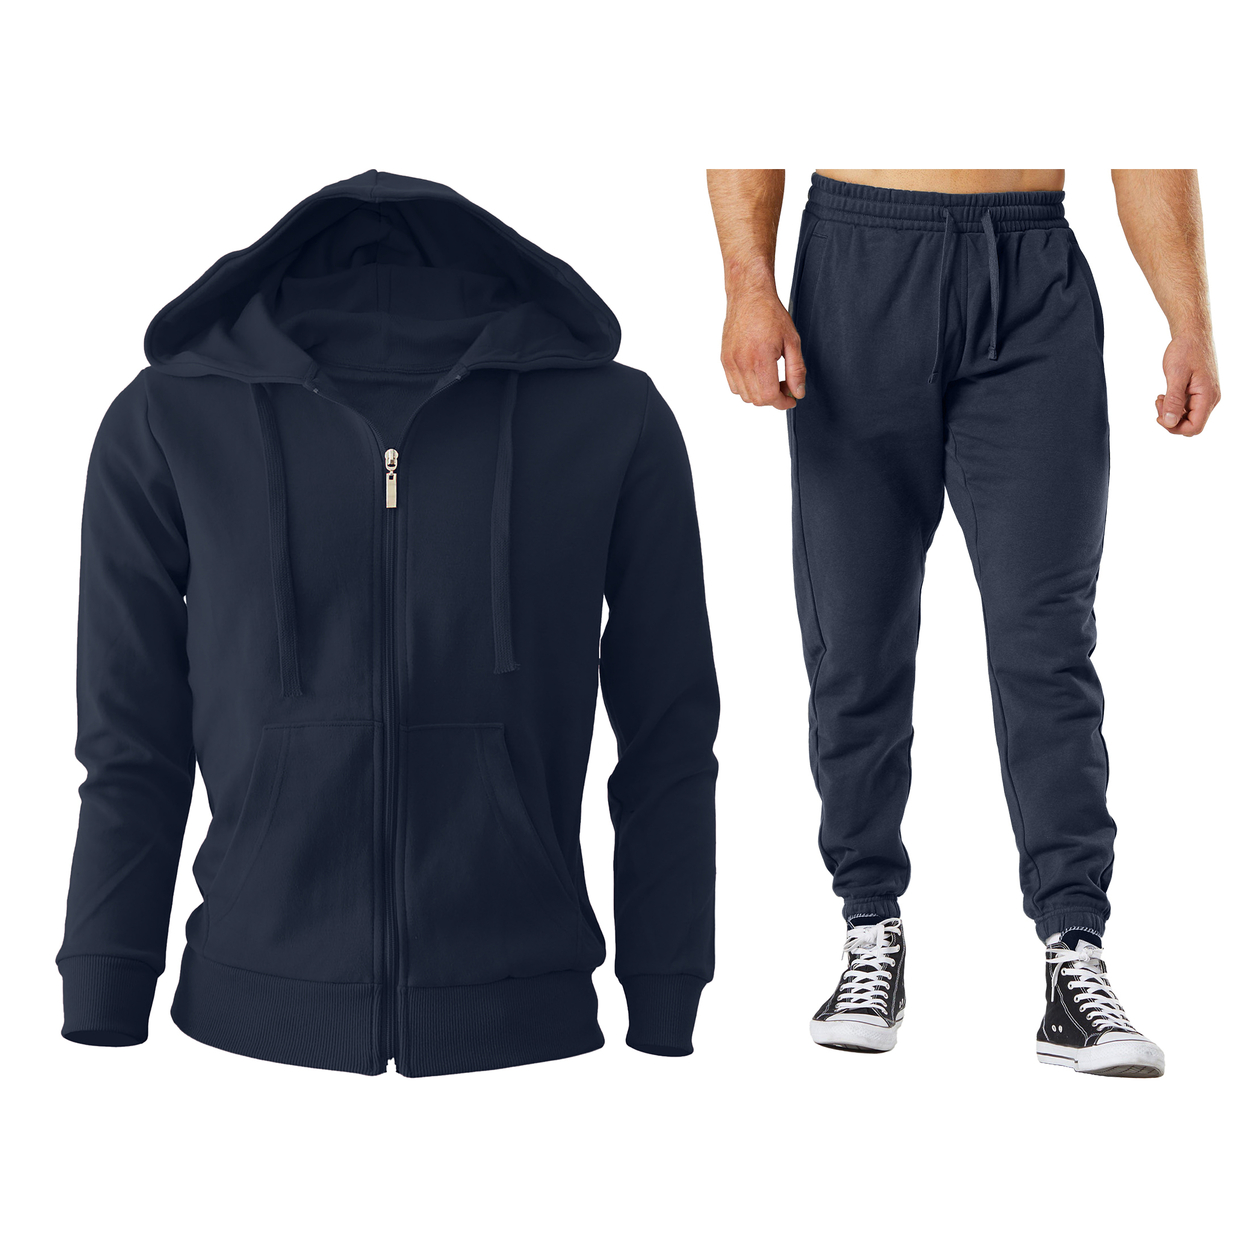 4-Piece: Men's Winter Warm Cozy Athletic Multi-Pockets BIG & TALL Sweatsuit Set - Charcoal, Xx-large